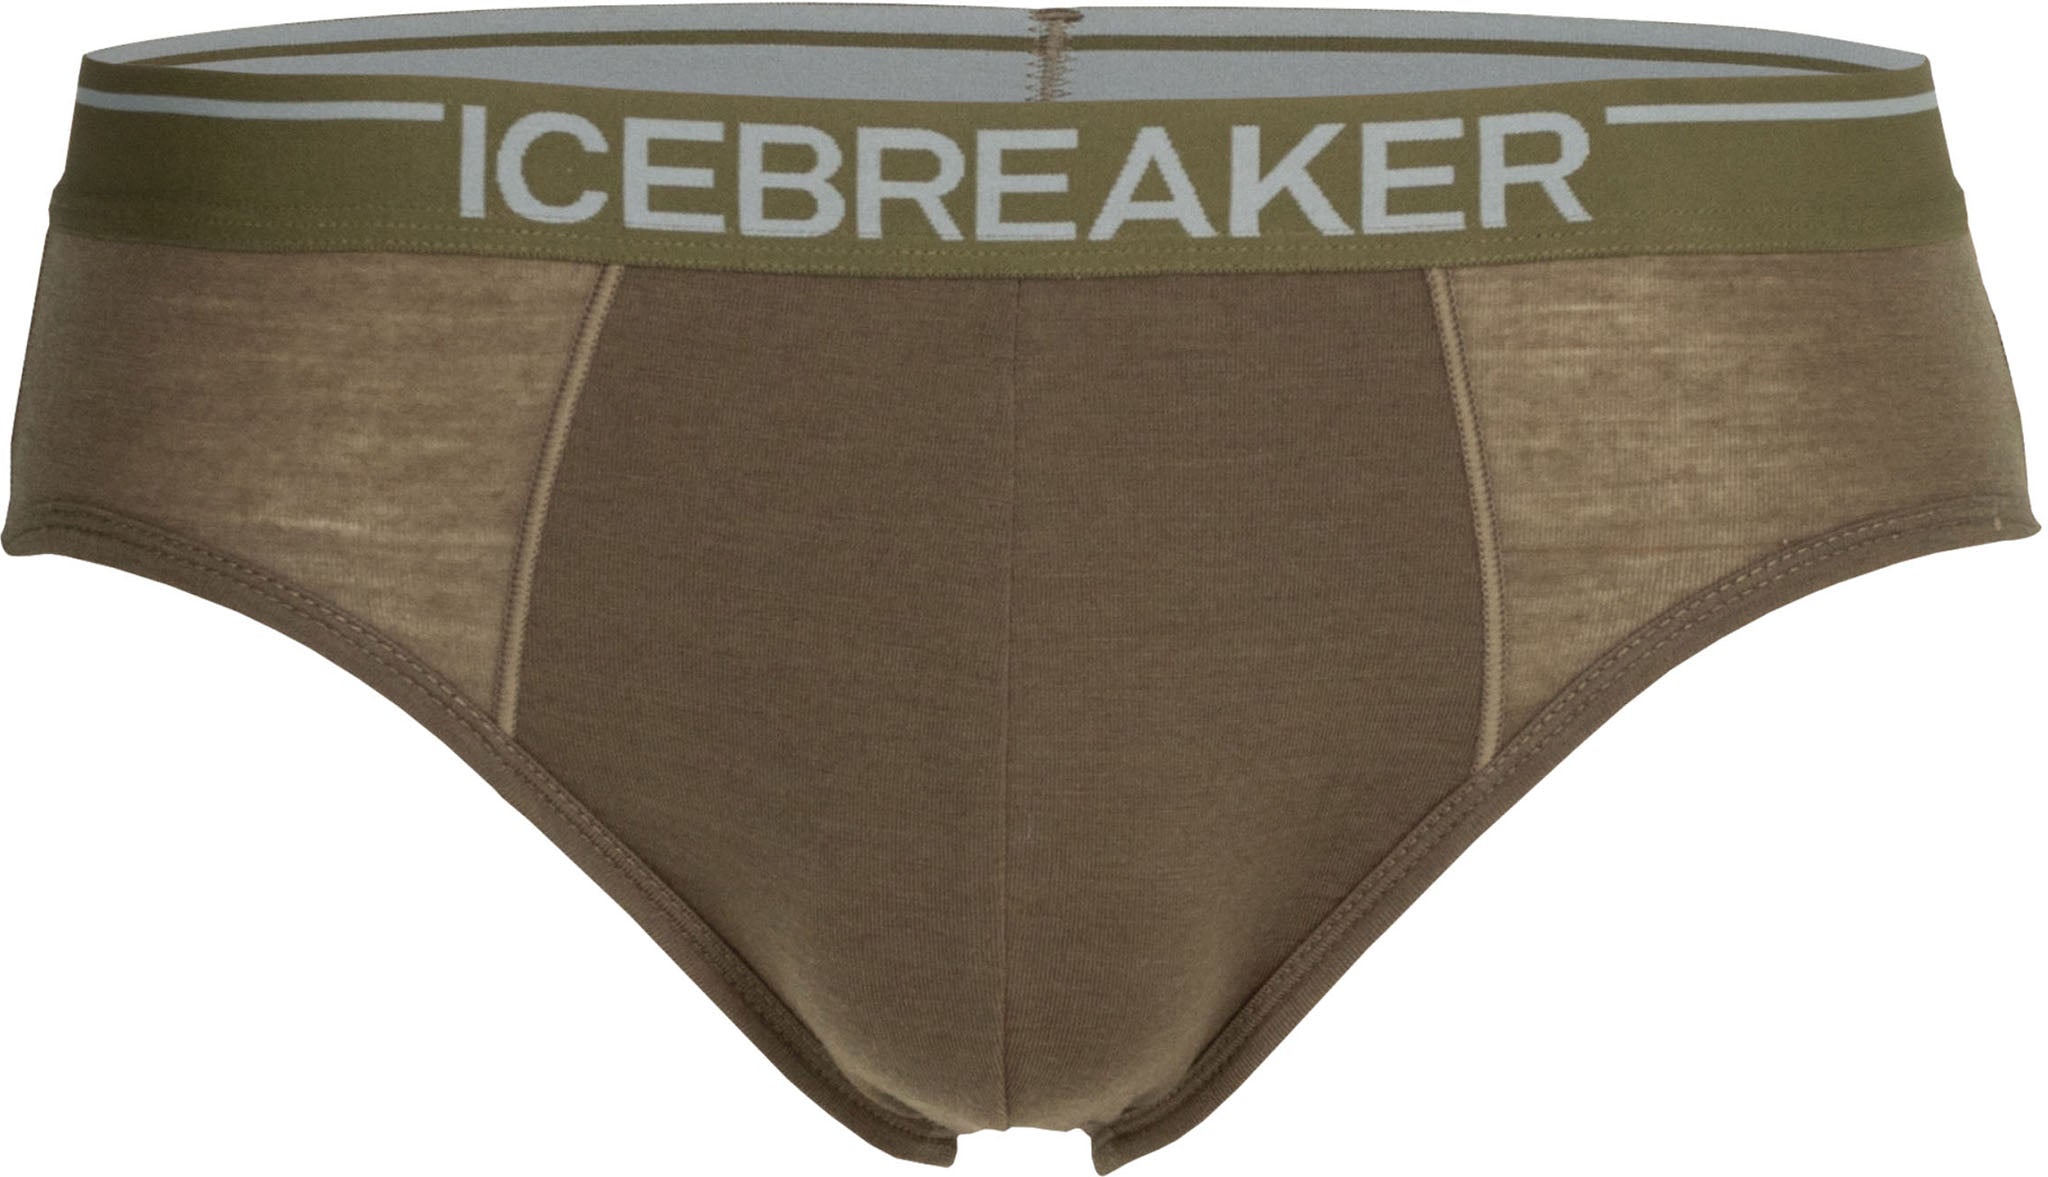 Icebreaker Anatomica Boxers - Merino base layer Men's